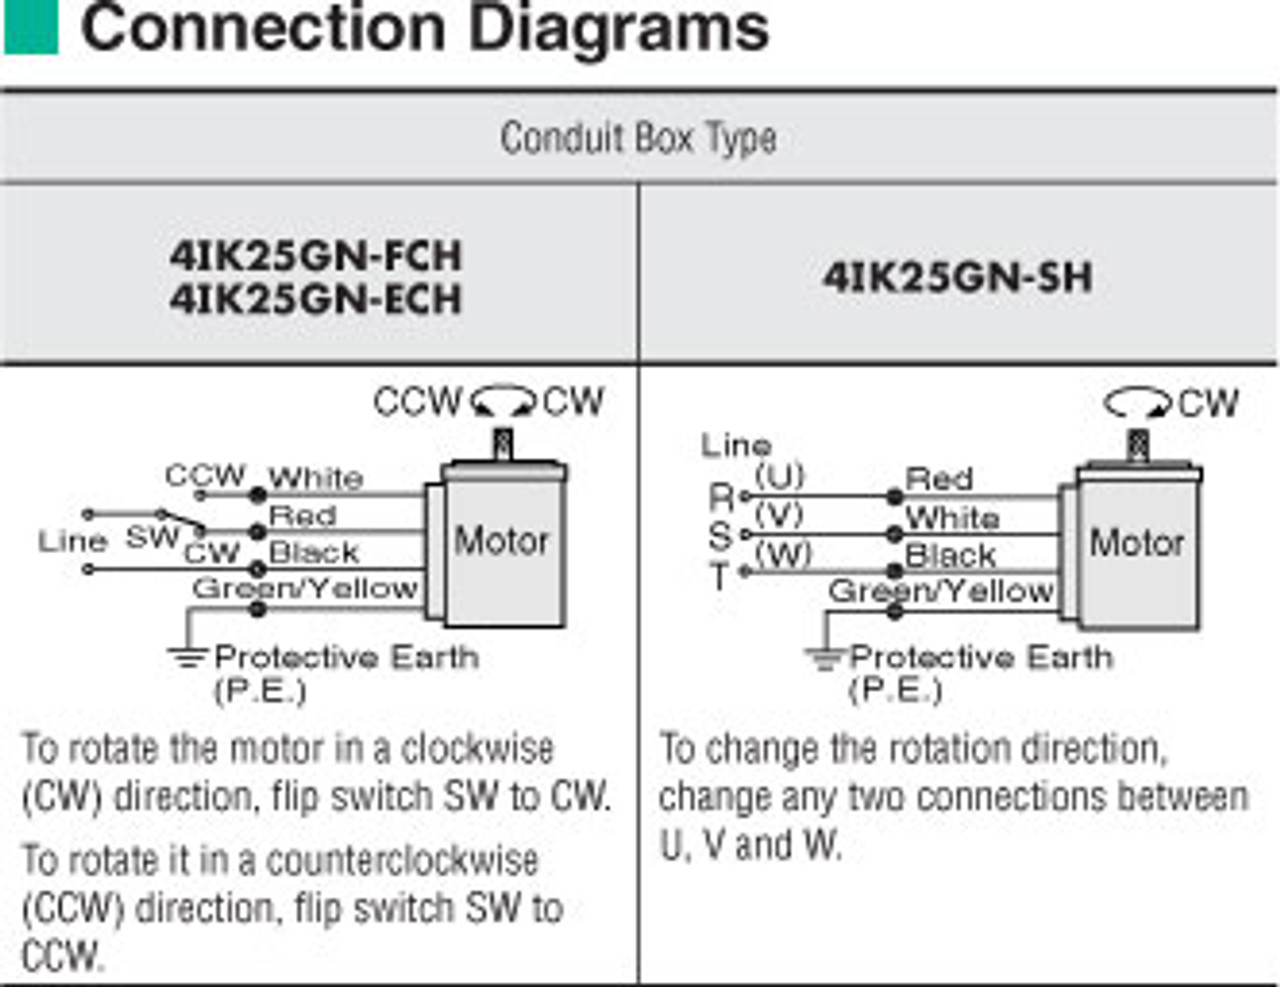 4IK25GN-SH / 4GN120SA - Connection